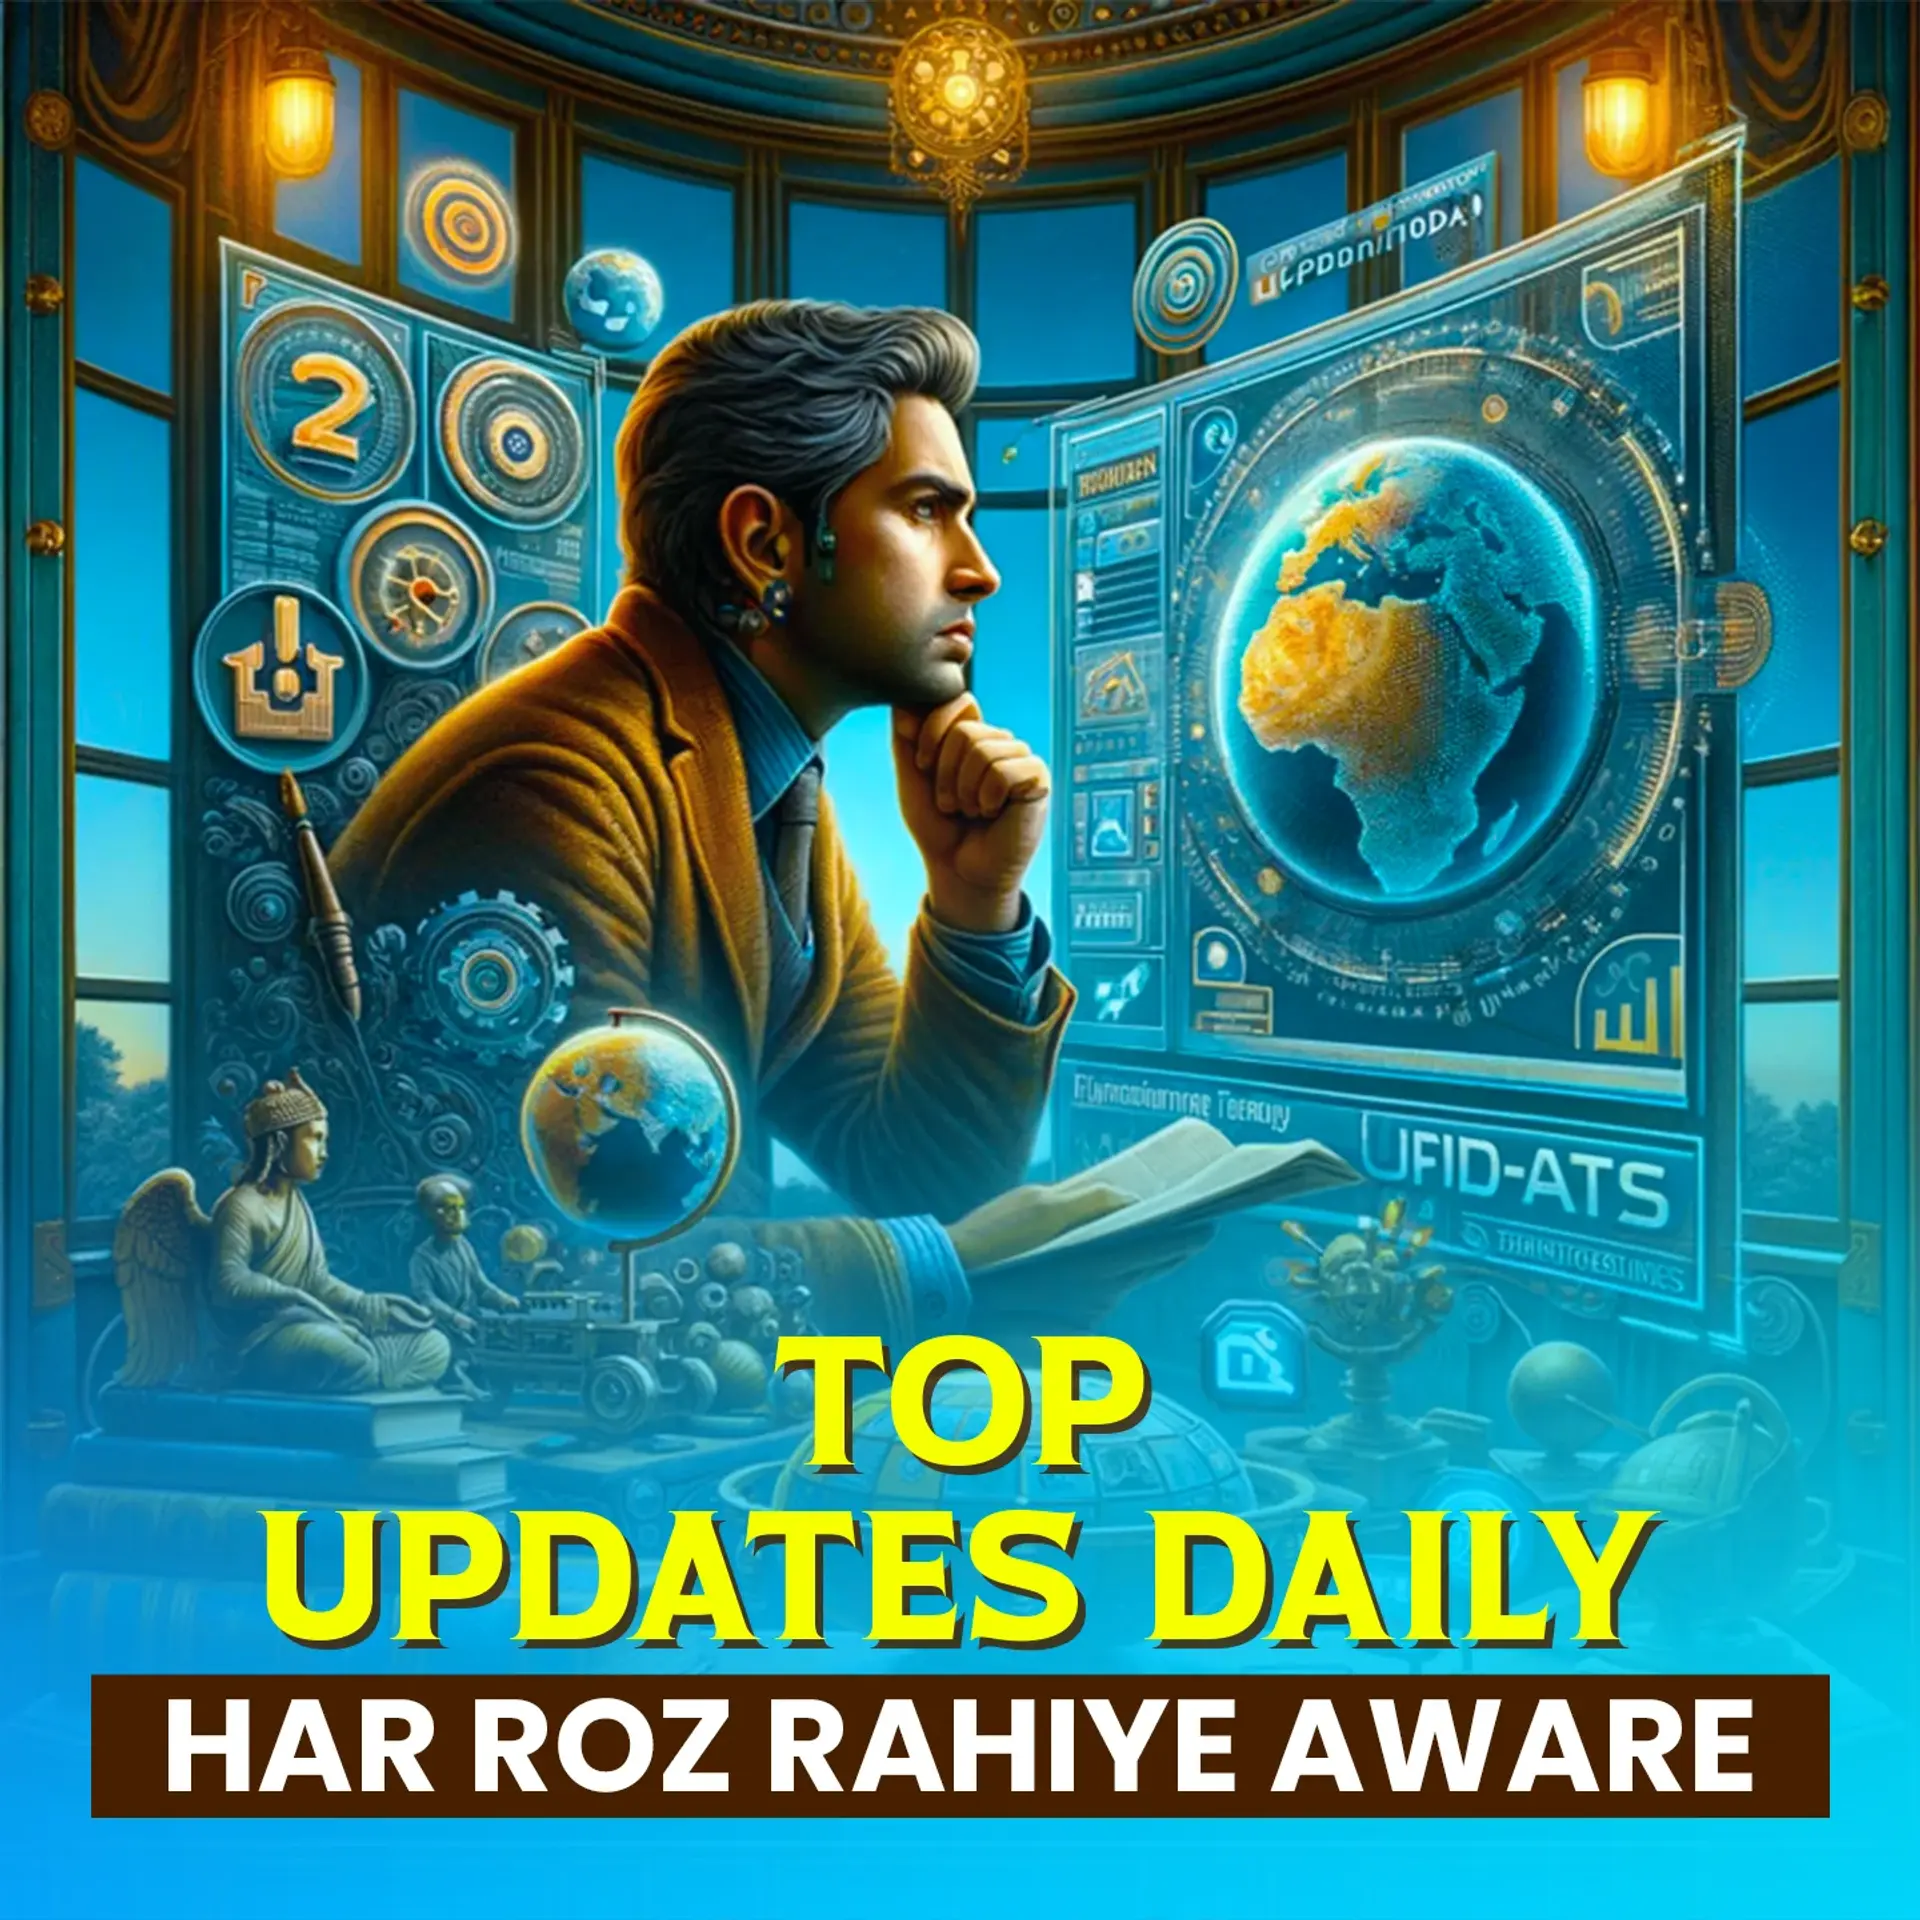 Top Updates Daily: Har roz rahiye aware | 